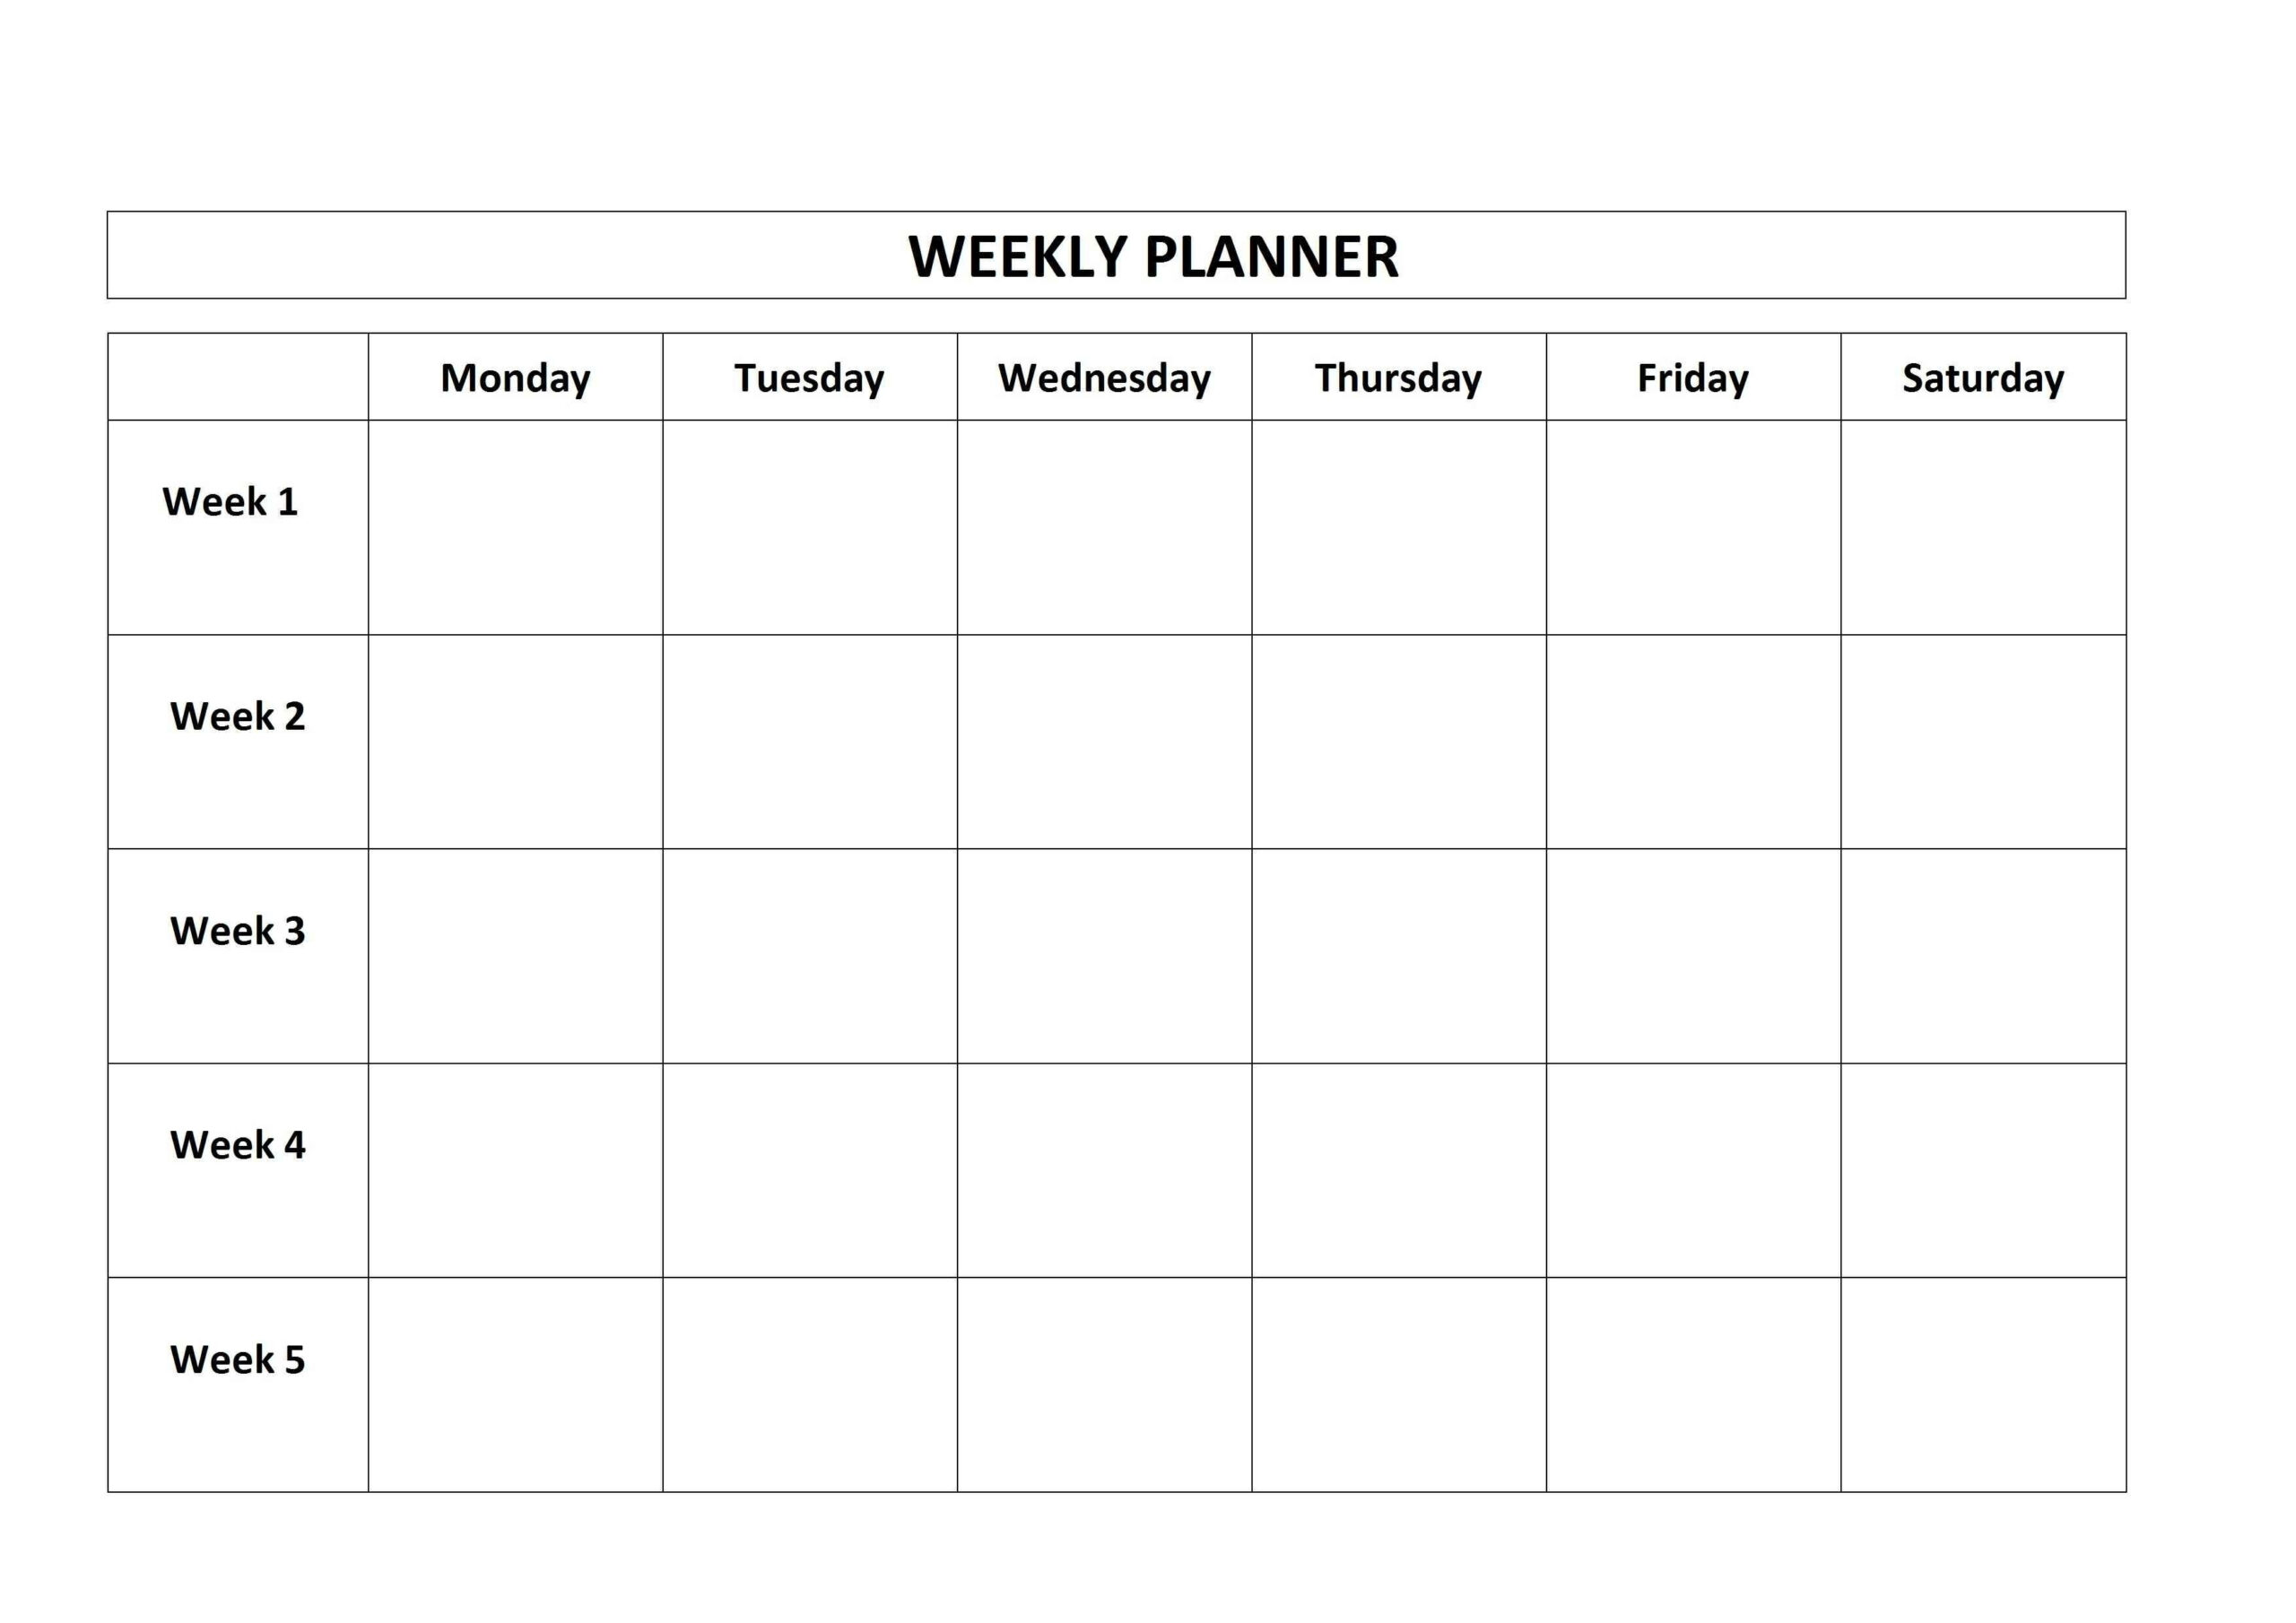 Monday To Friday Schedule Template | Example Calendar Printable inside Monday Thru Friday Calendar Template